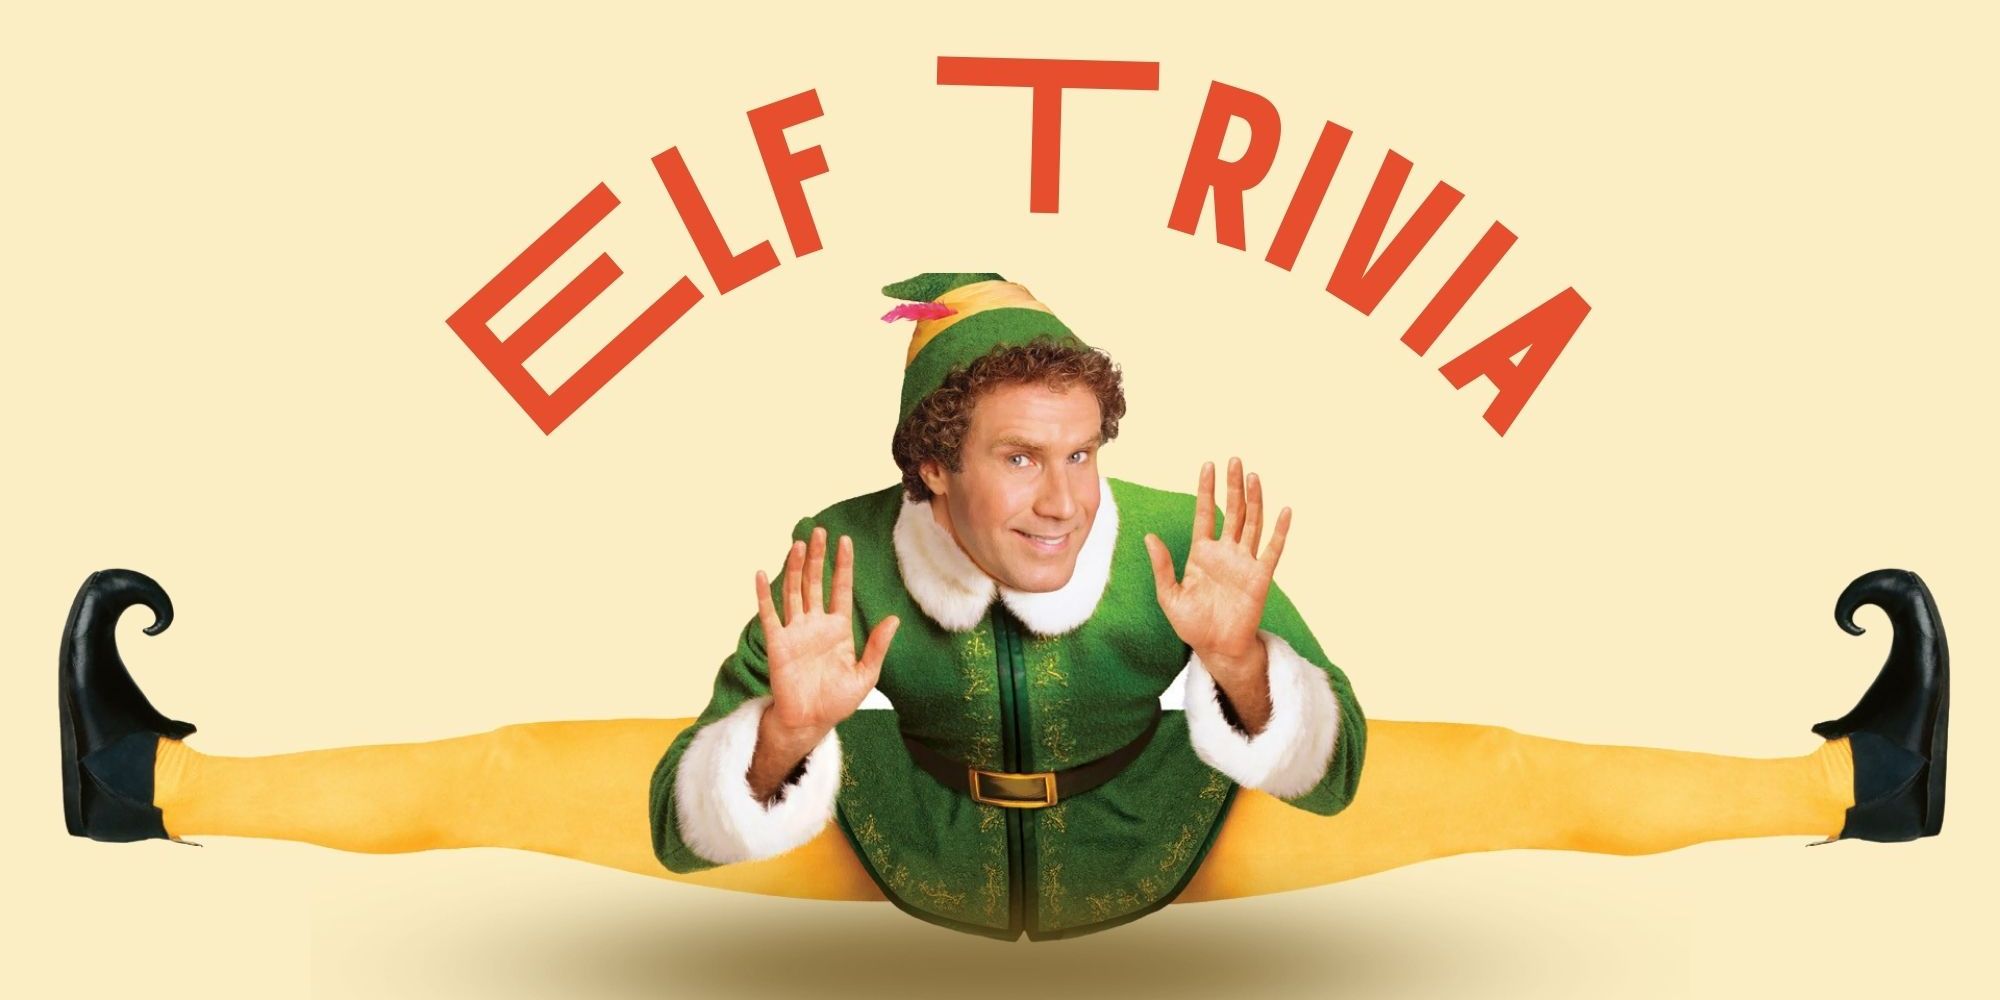 Elf Trivia promotional image